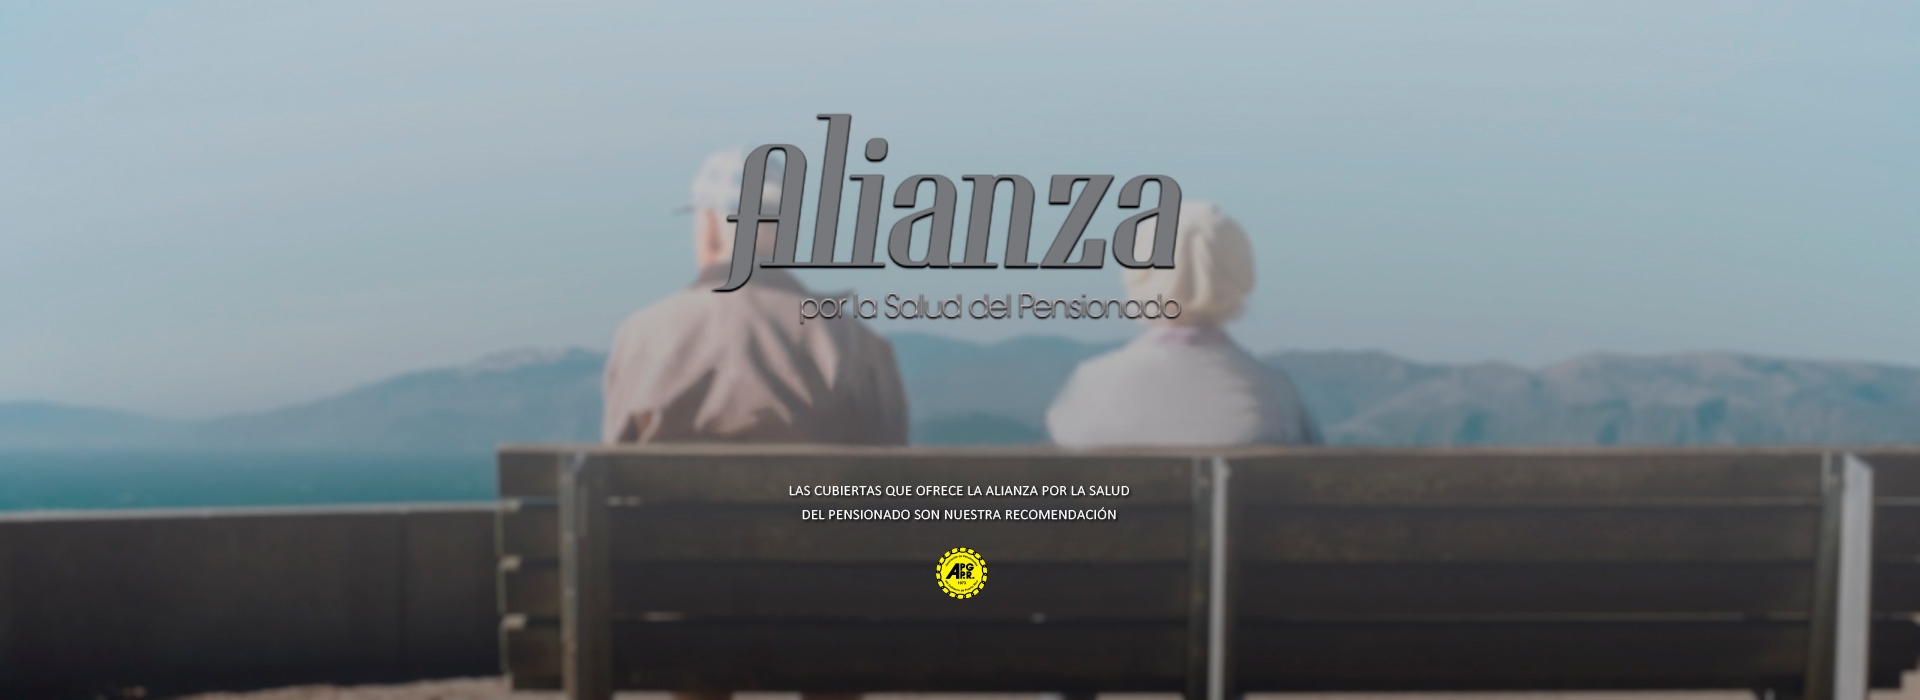 Alianza_Imagen_Texto_2